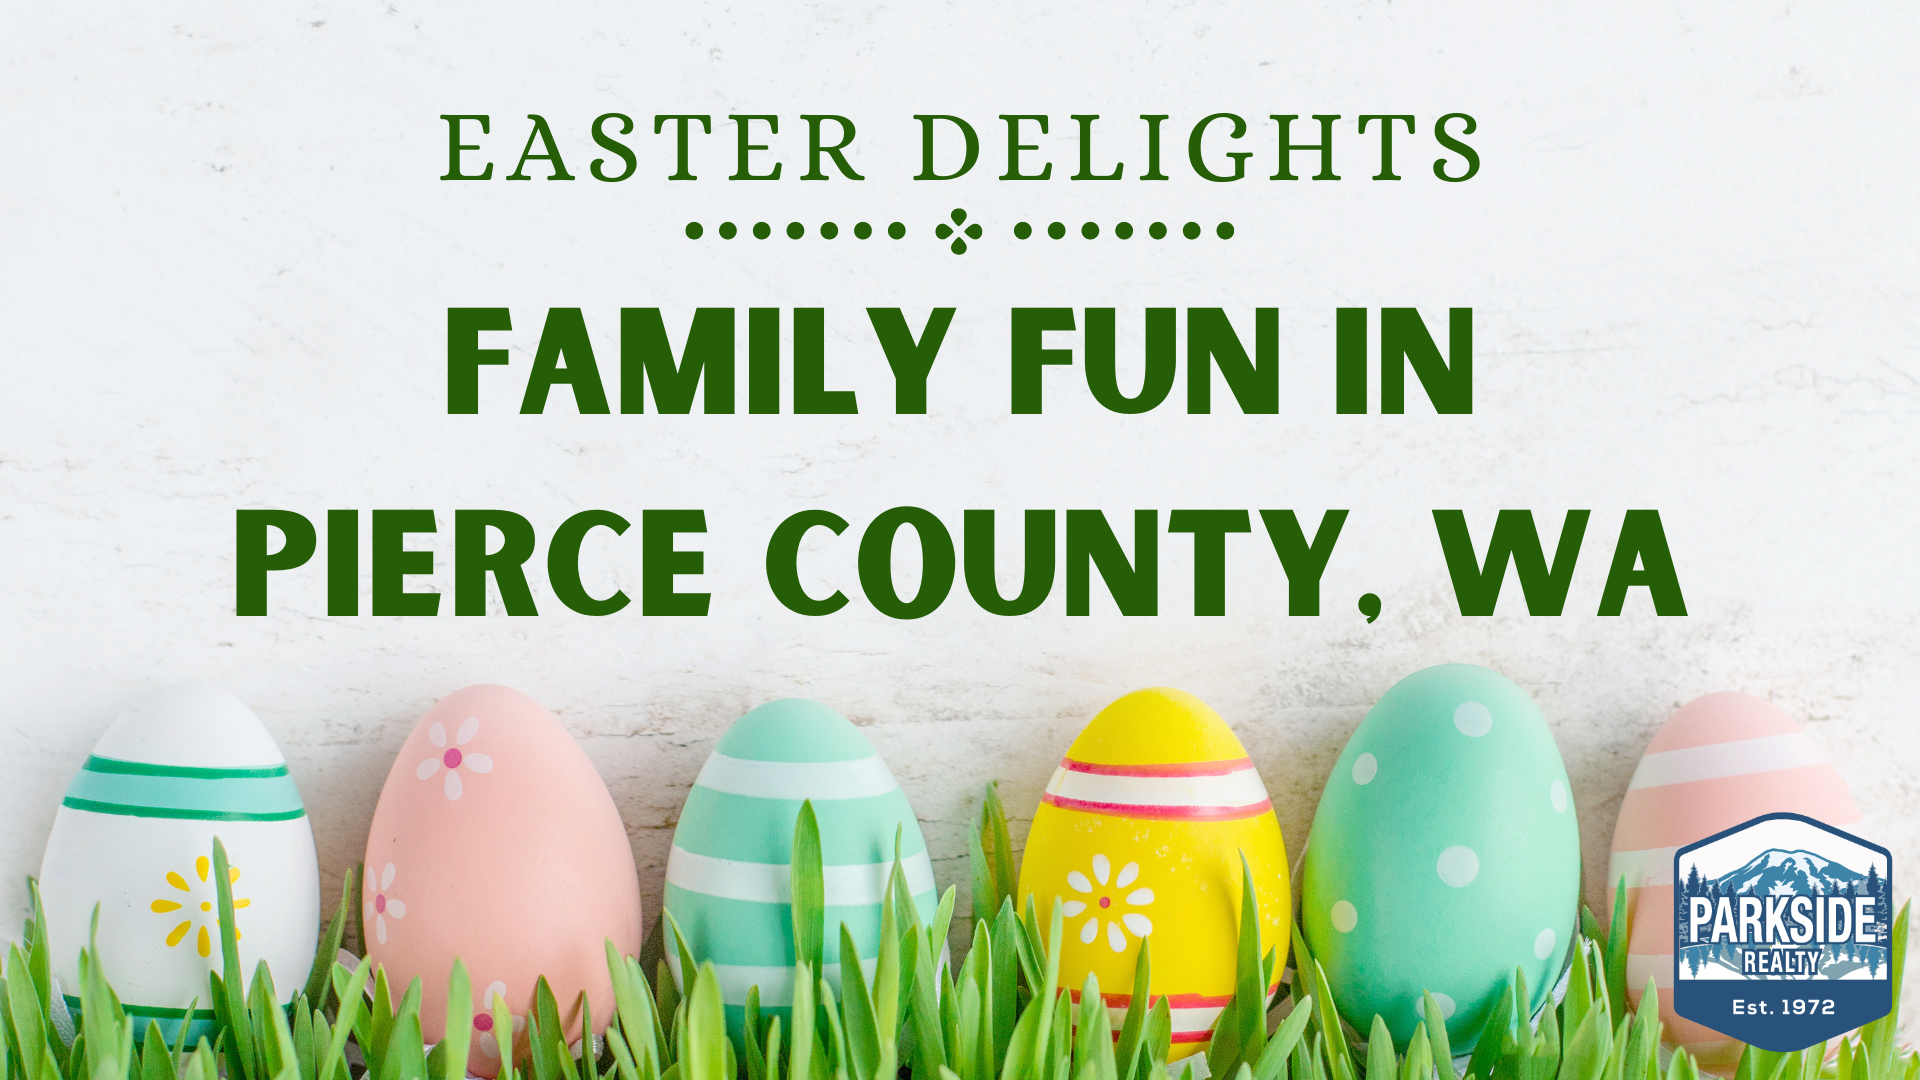 Easter Delights: Family Fun in Pierce County, WA